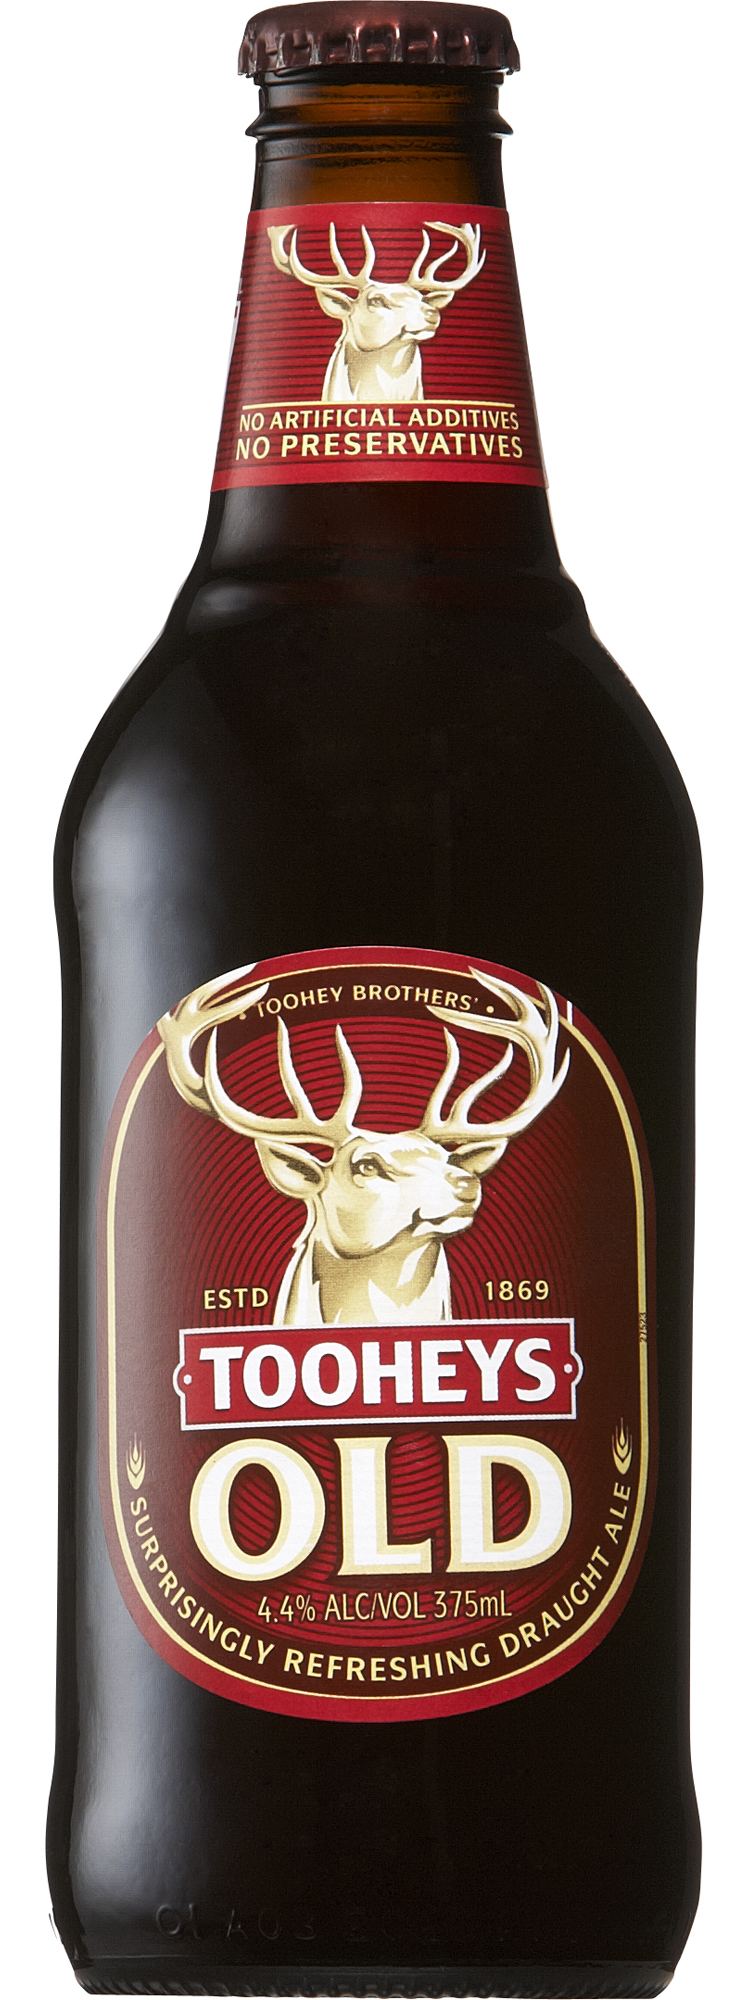 Tooheys Old beerstorecomauwpcontentuploads201509toohey